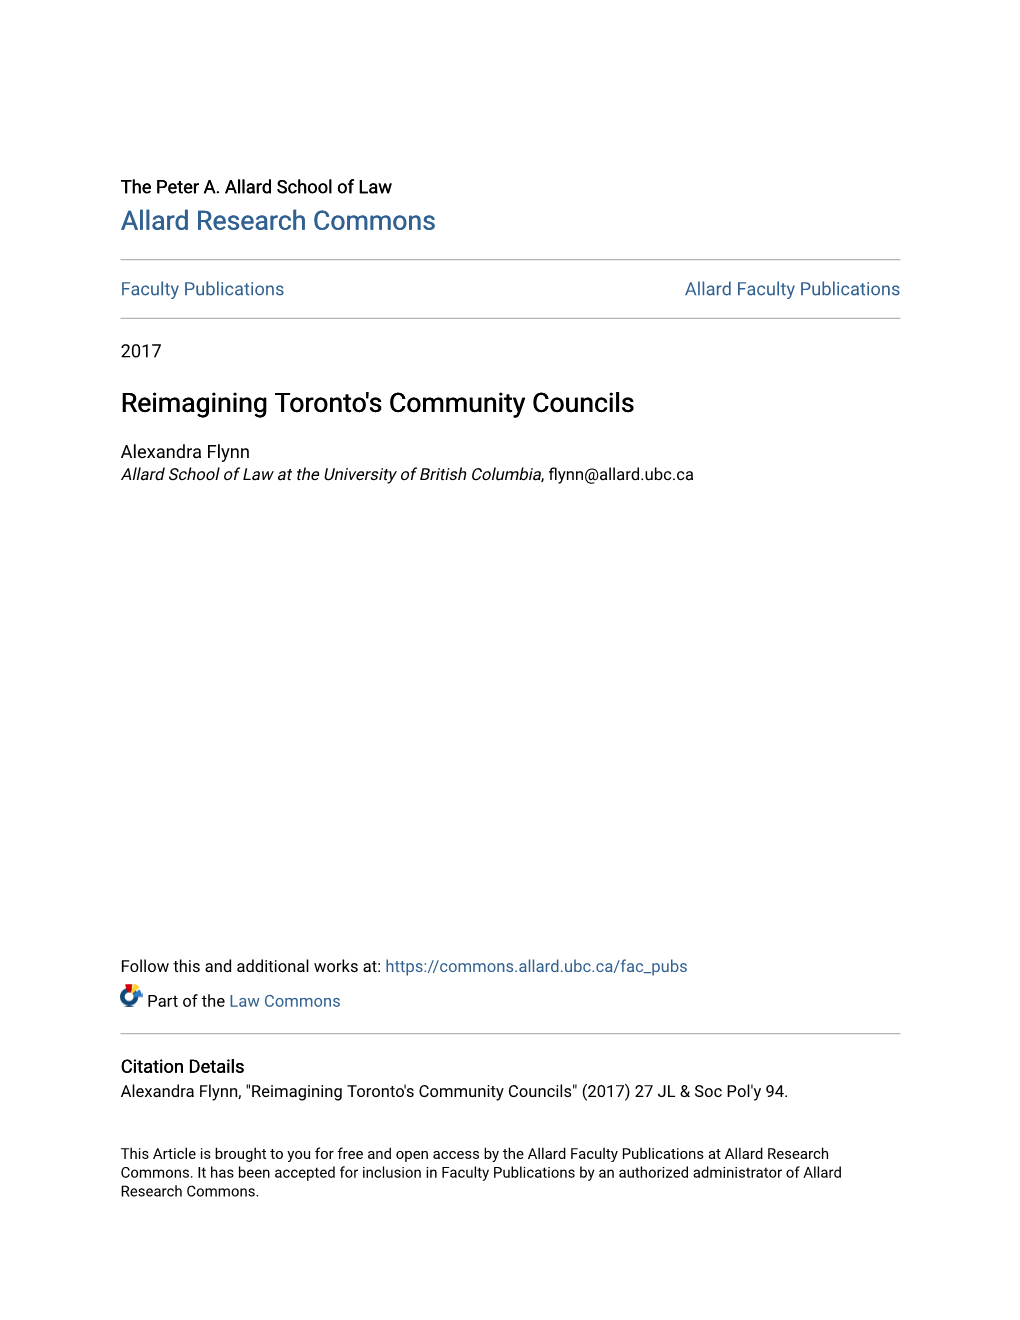 Reimagining Toronto's Community Councils